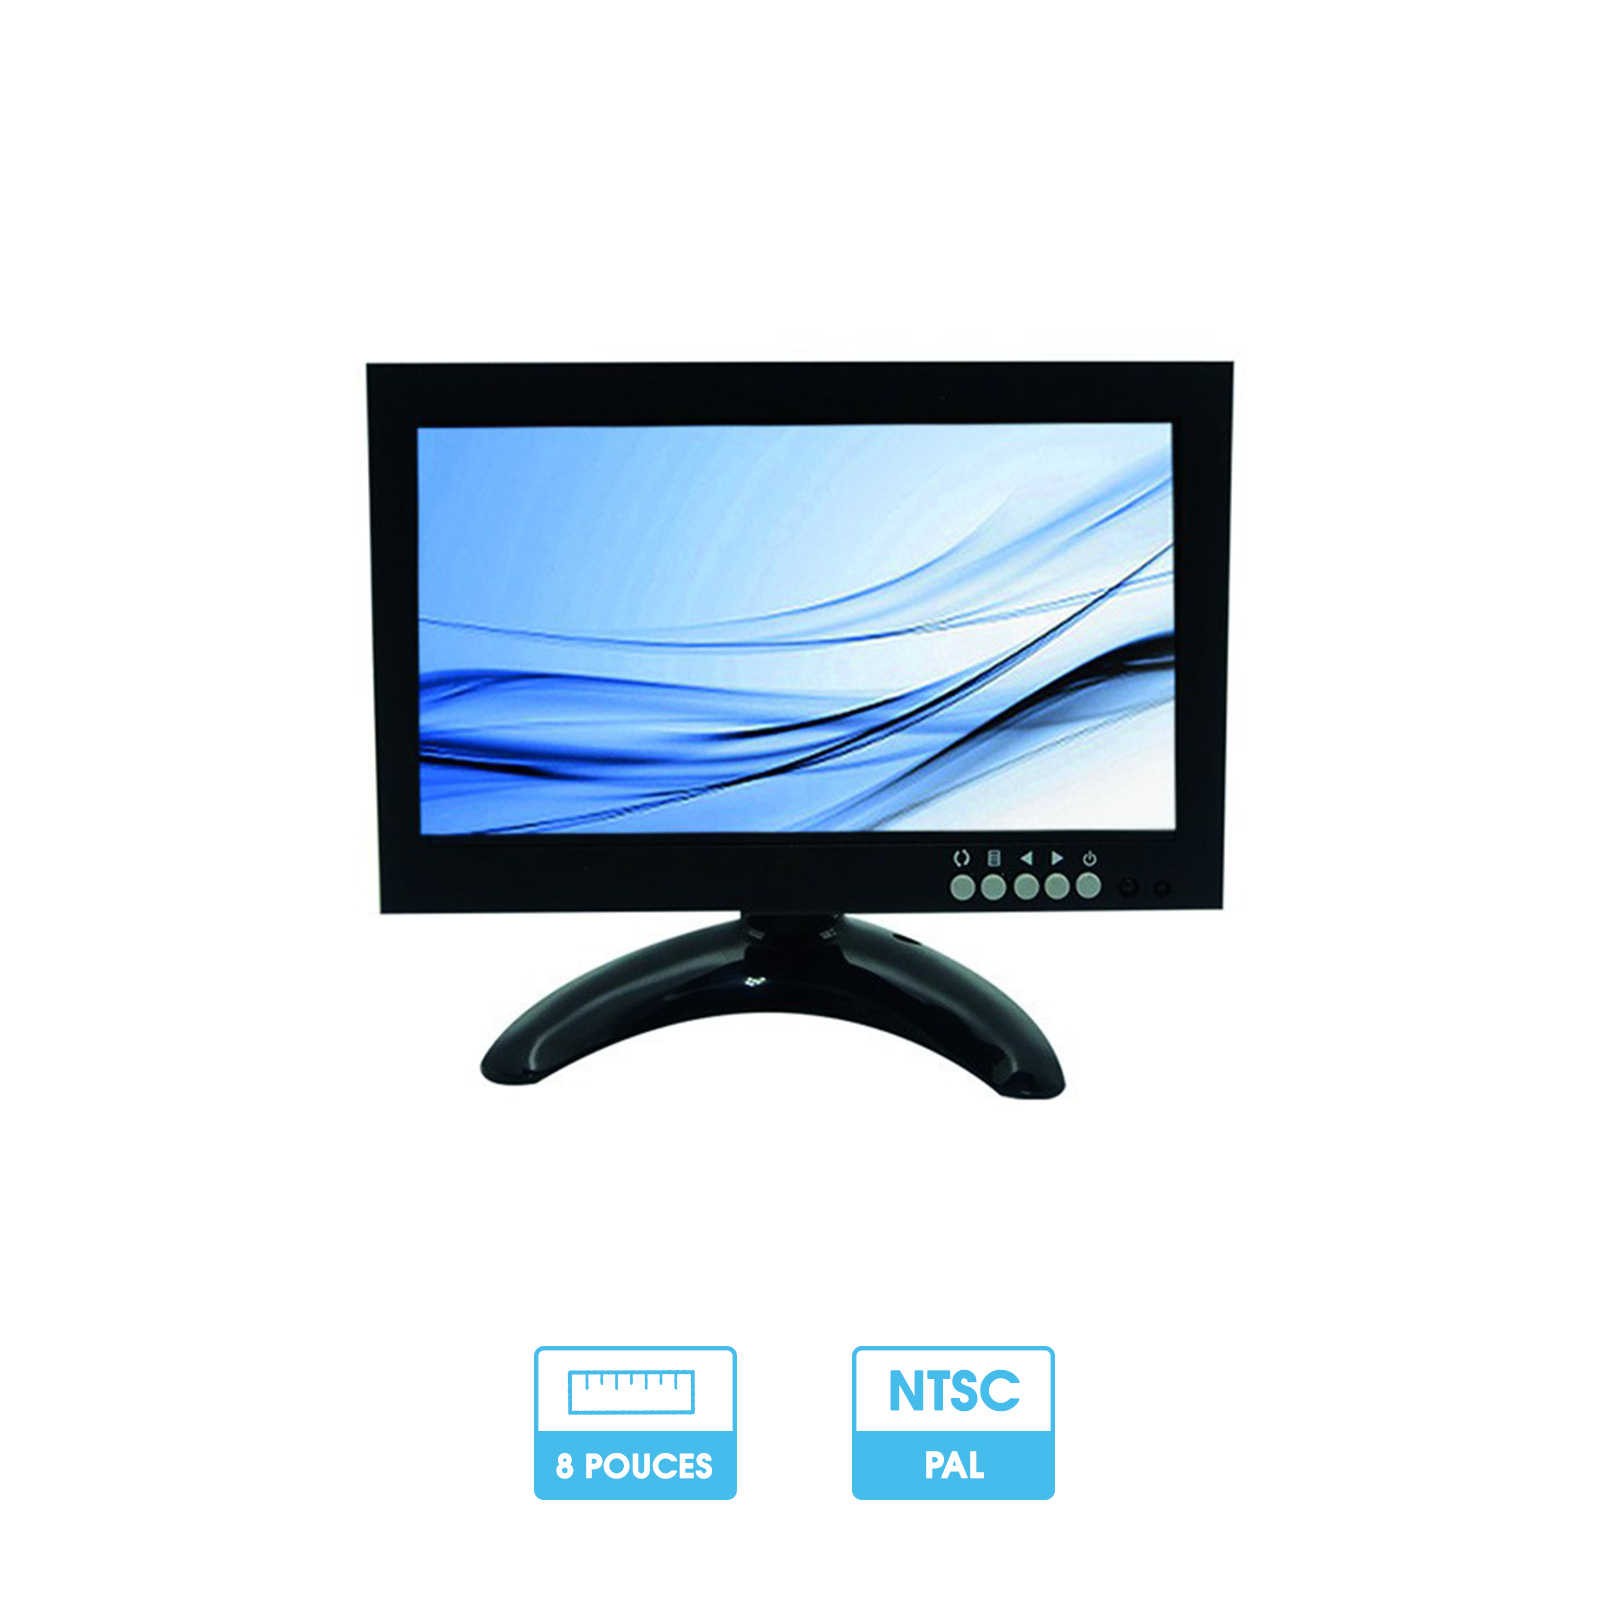 Ecran LCD de vidéosurveillance 8 pouces | 16:9 Full HD | Entrées BNC / AV / VGA et HDMI